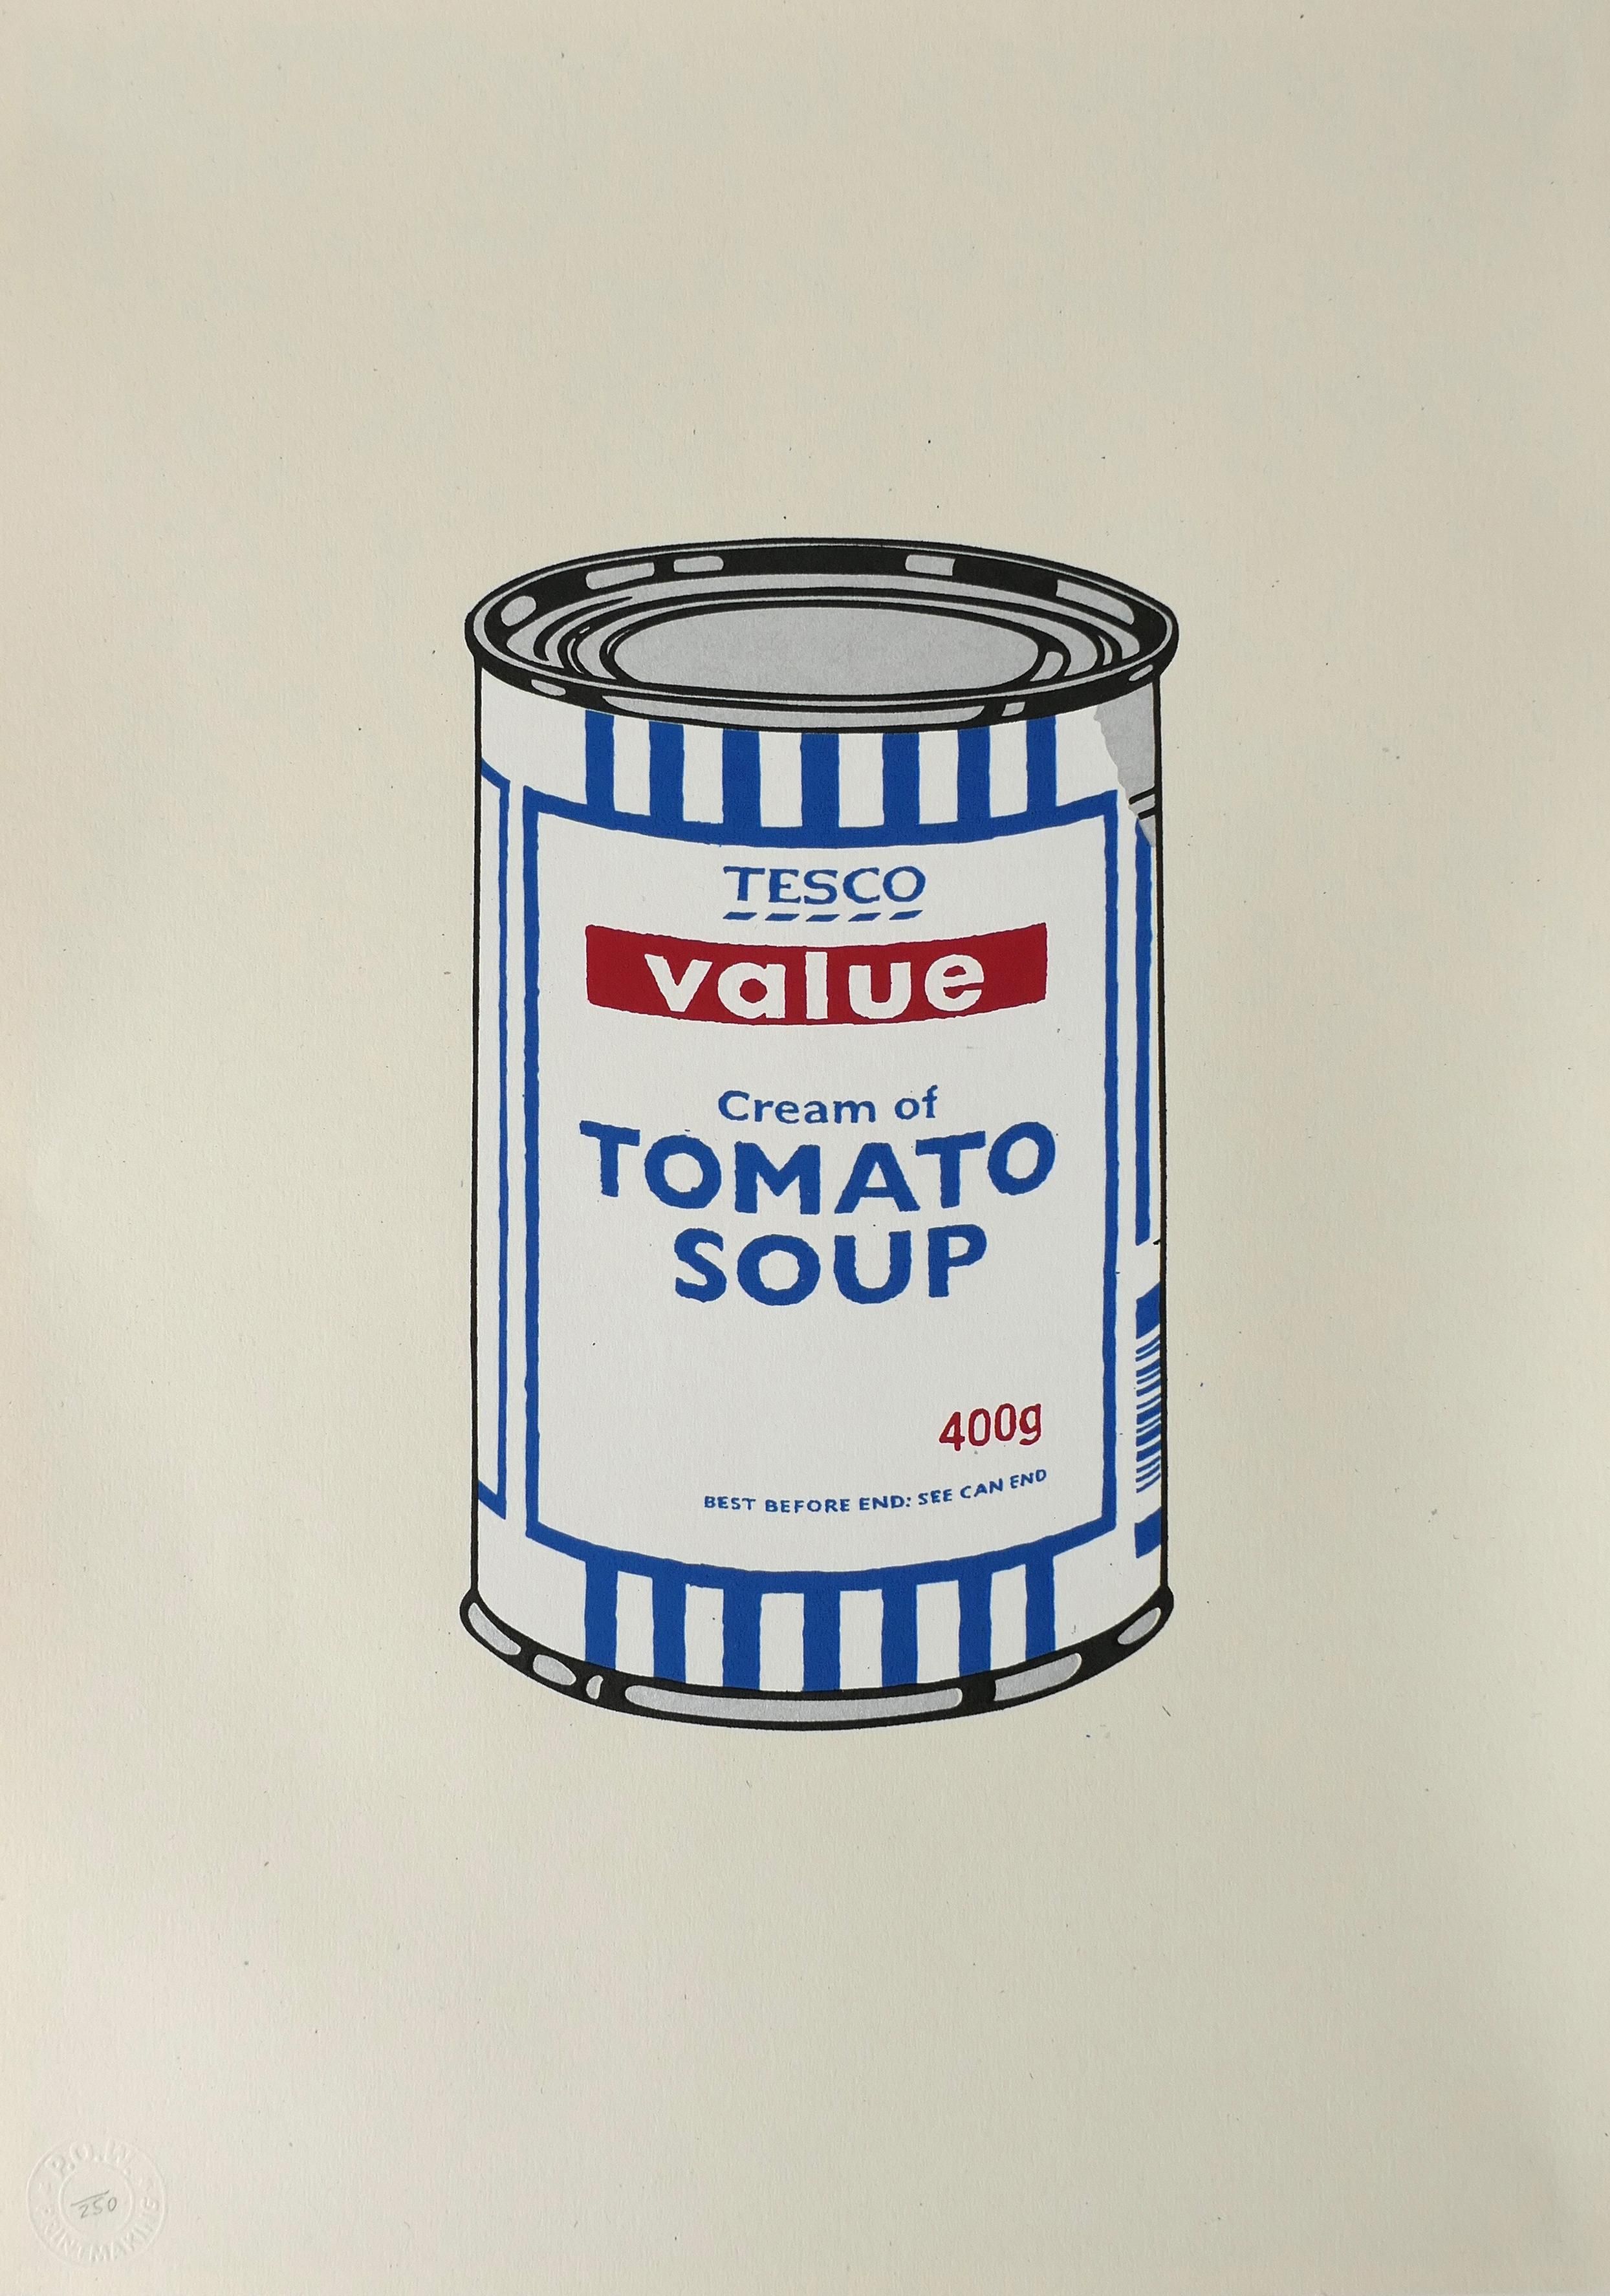 "TESCO VALUE TOMATO SOUP CANS" / BANKSY